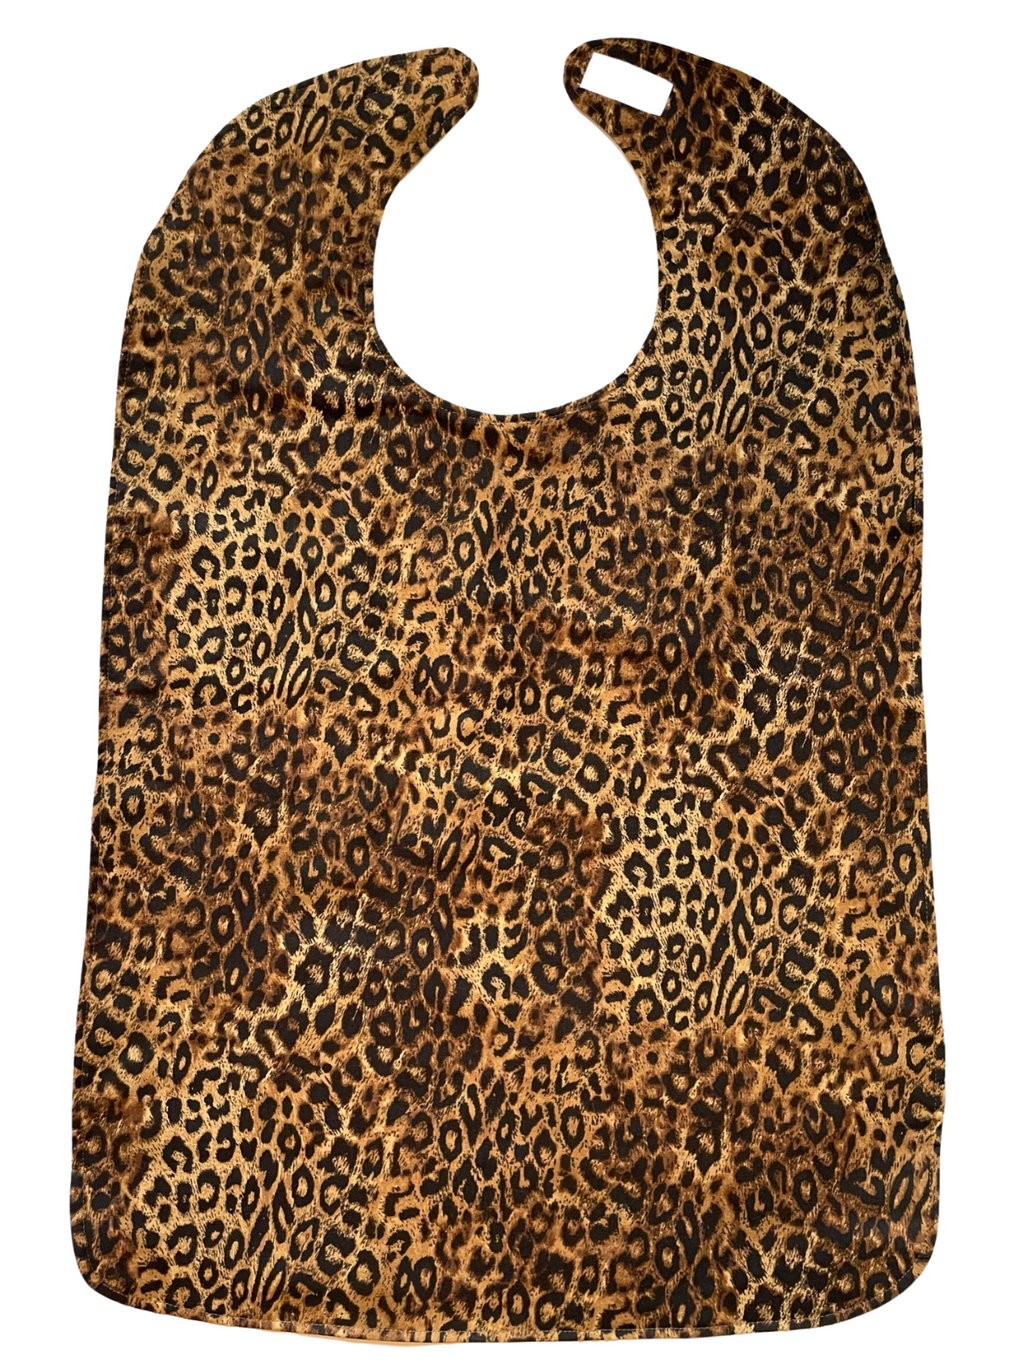 BAVETTE adult bib with leopard spot design, and three layers of machine washable premium cotton, Velcro back closure, 26" x 17" 